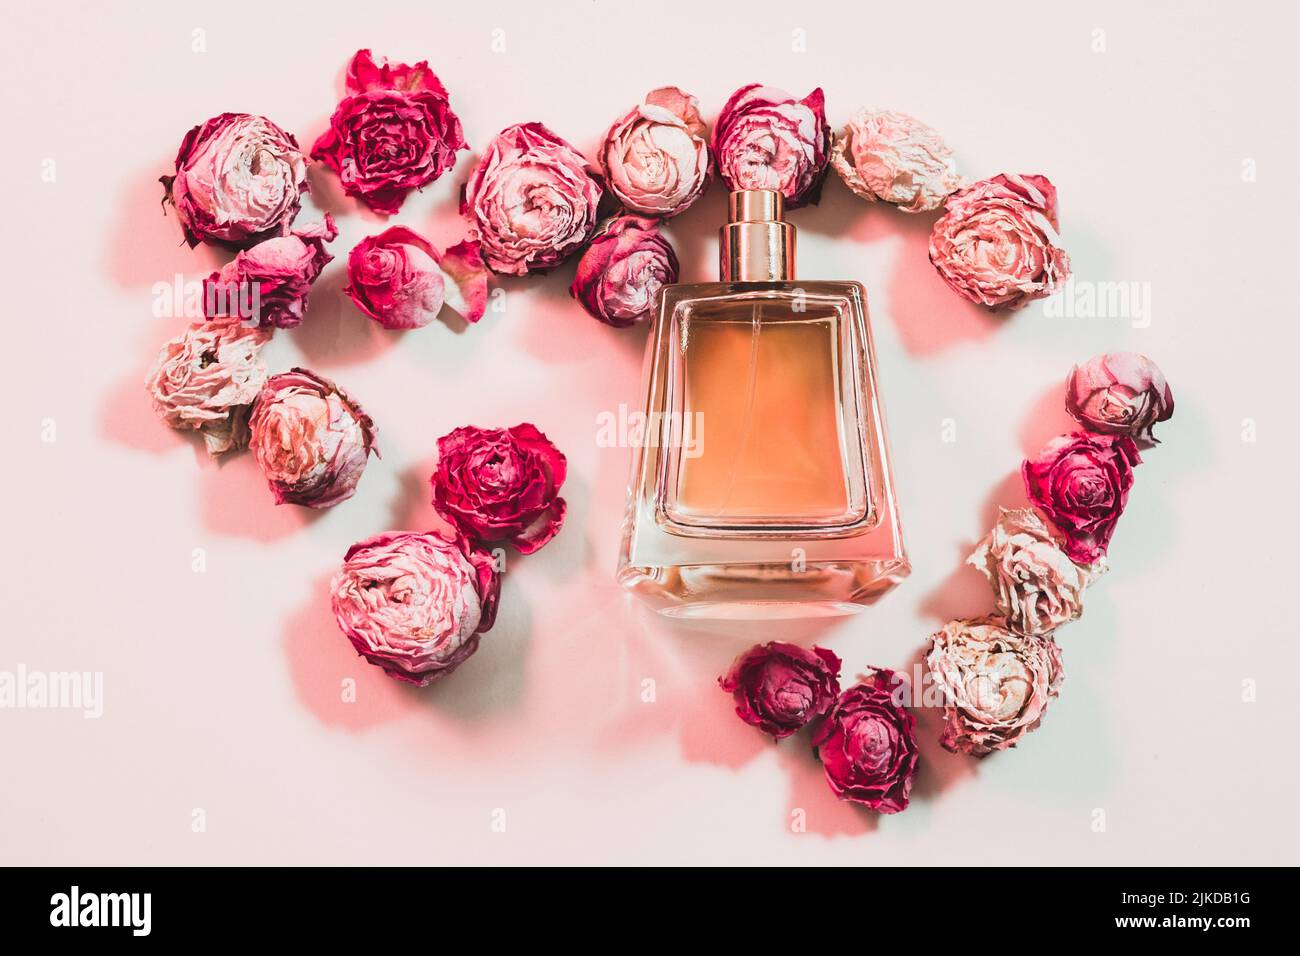 female perfume gift flower arrangement dried roses Stock Photo